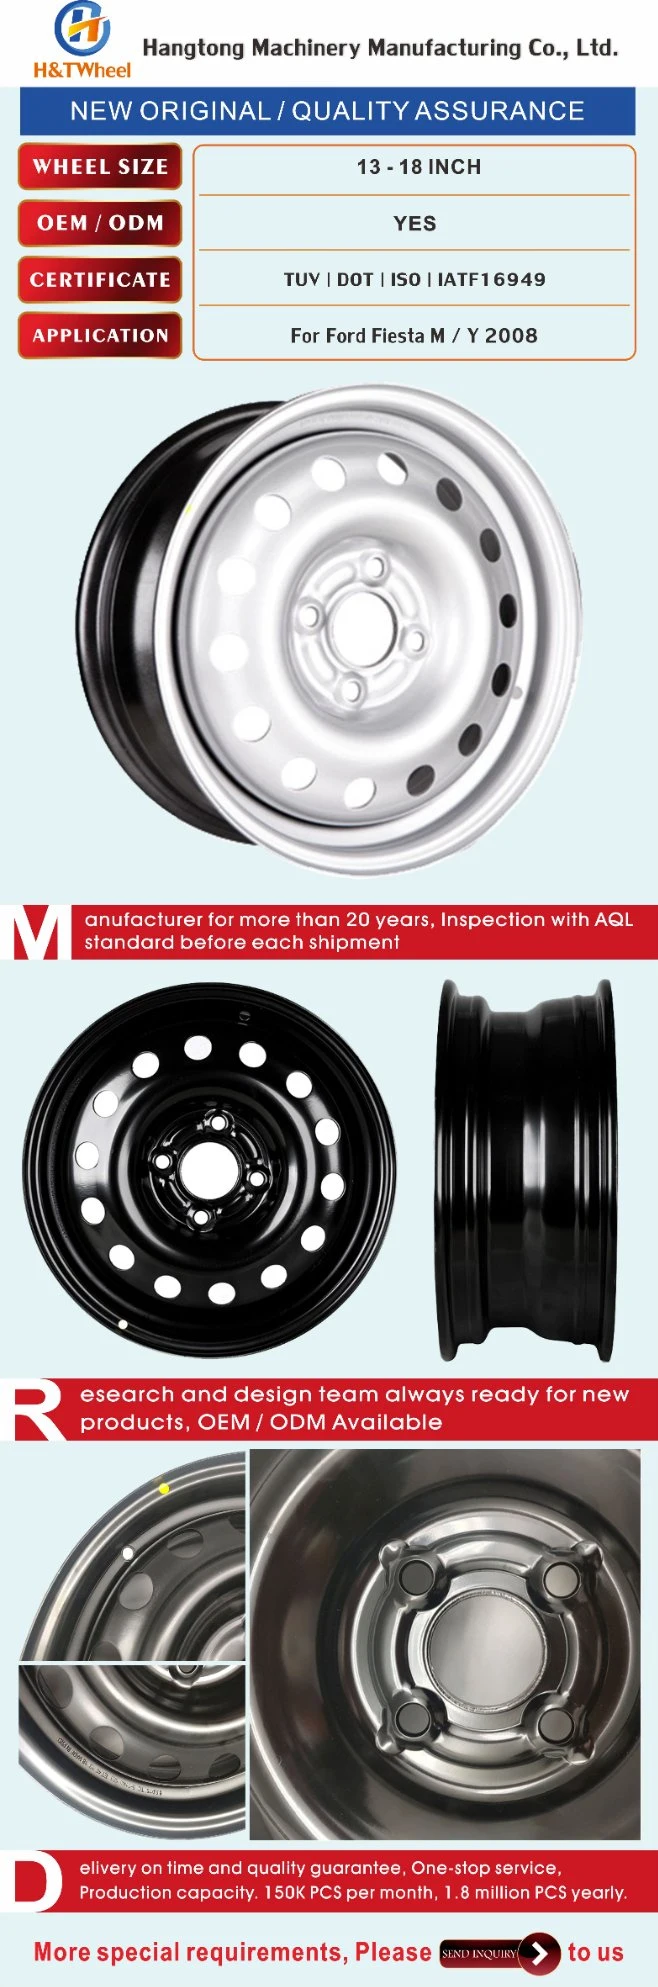 H&T Wheel 564408 15X6 4X108 15 Inch Black E-Coating Steel Wheel Rim